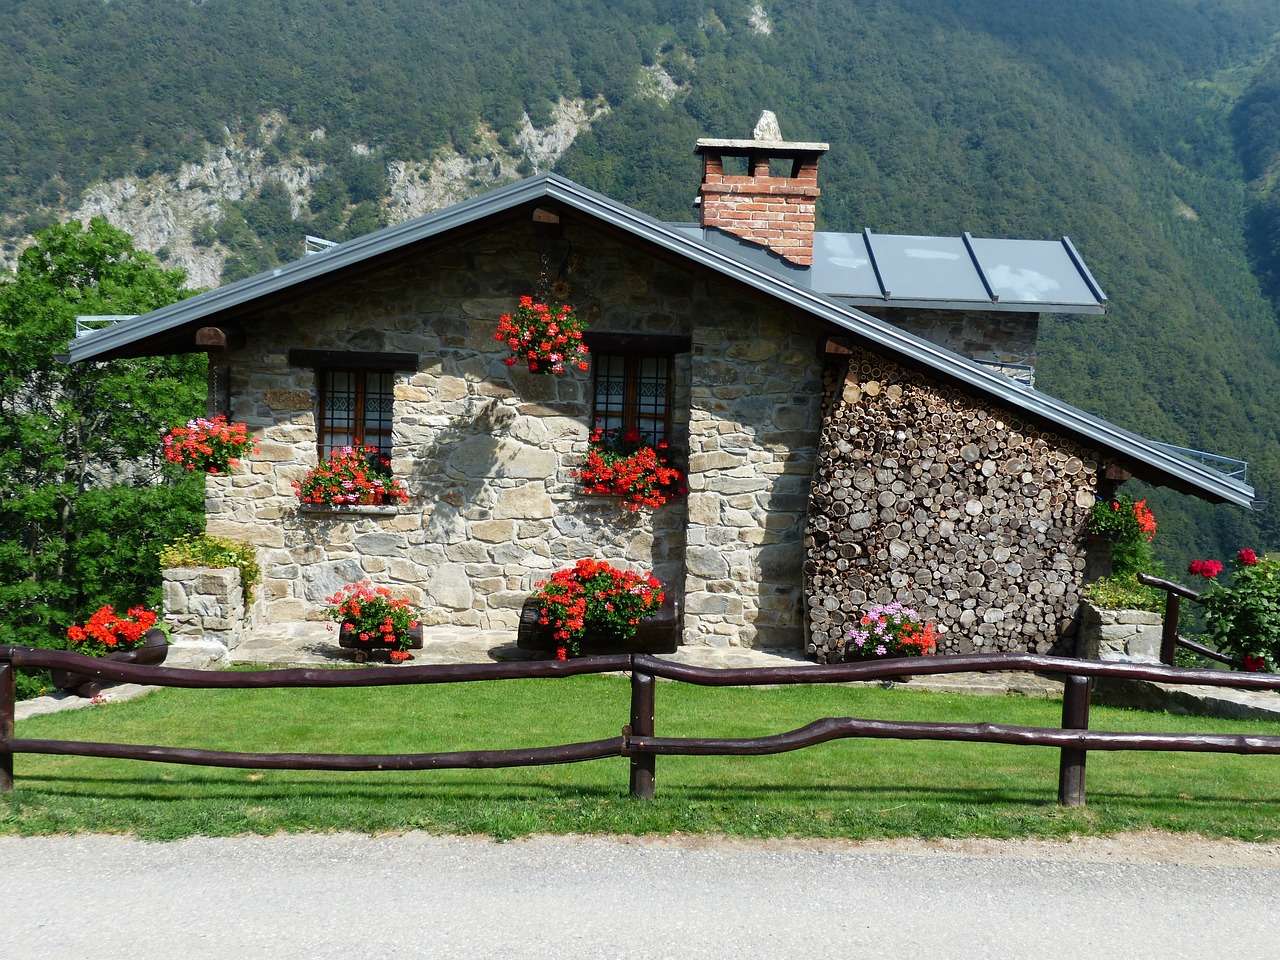 Huis in bergen legpuzzel online